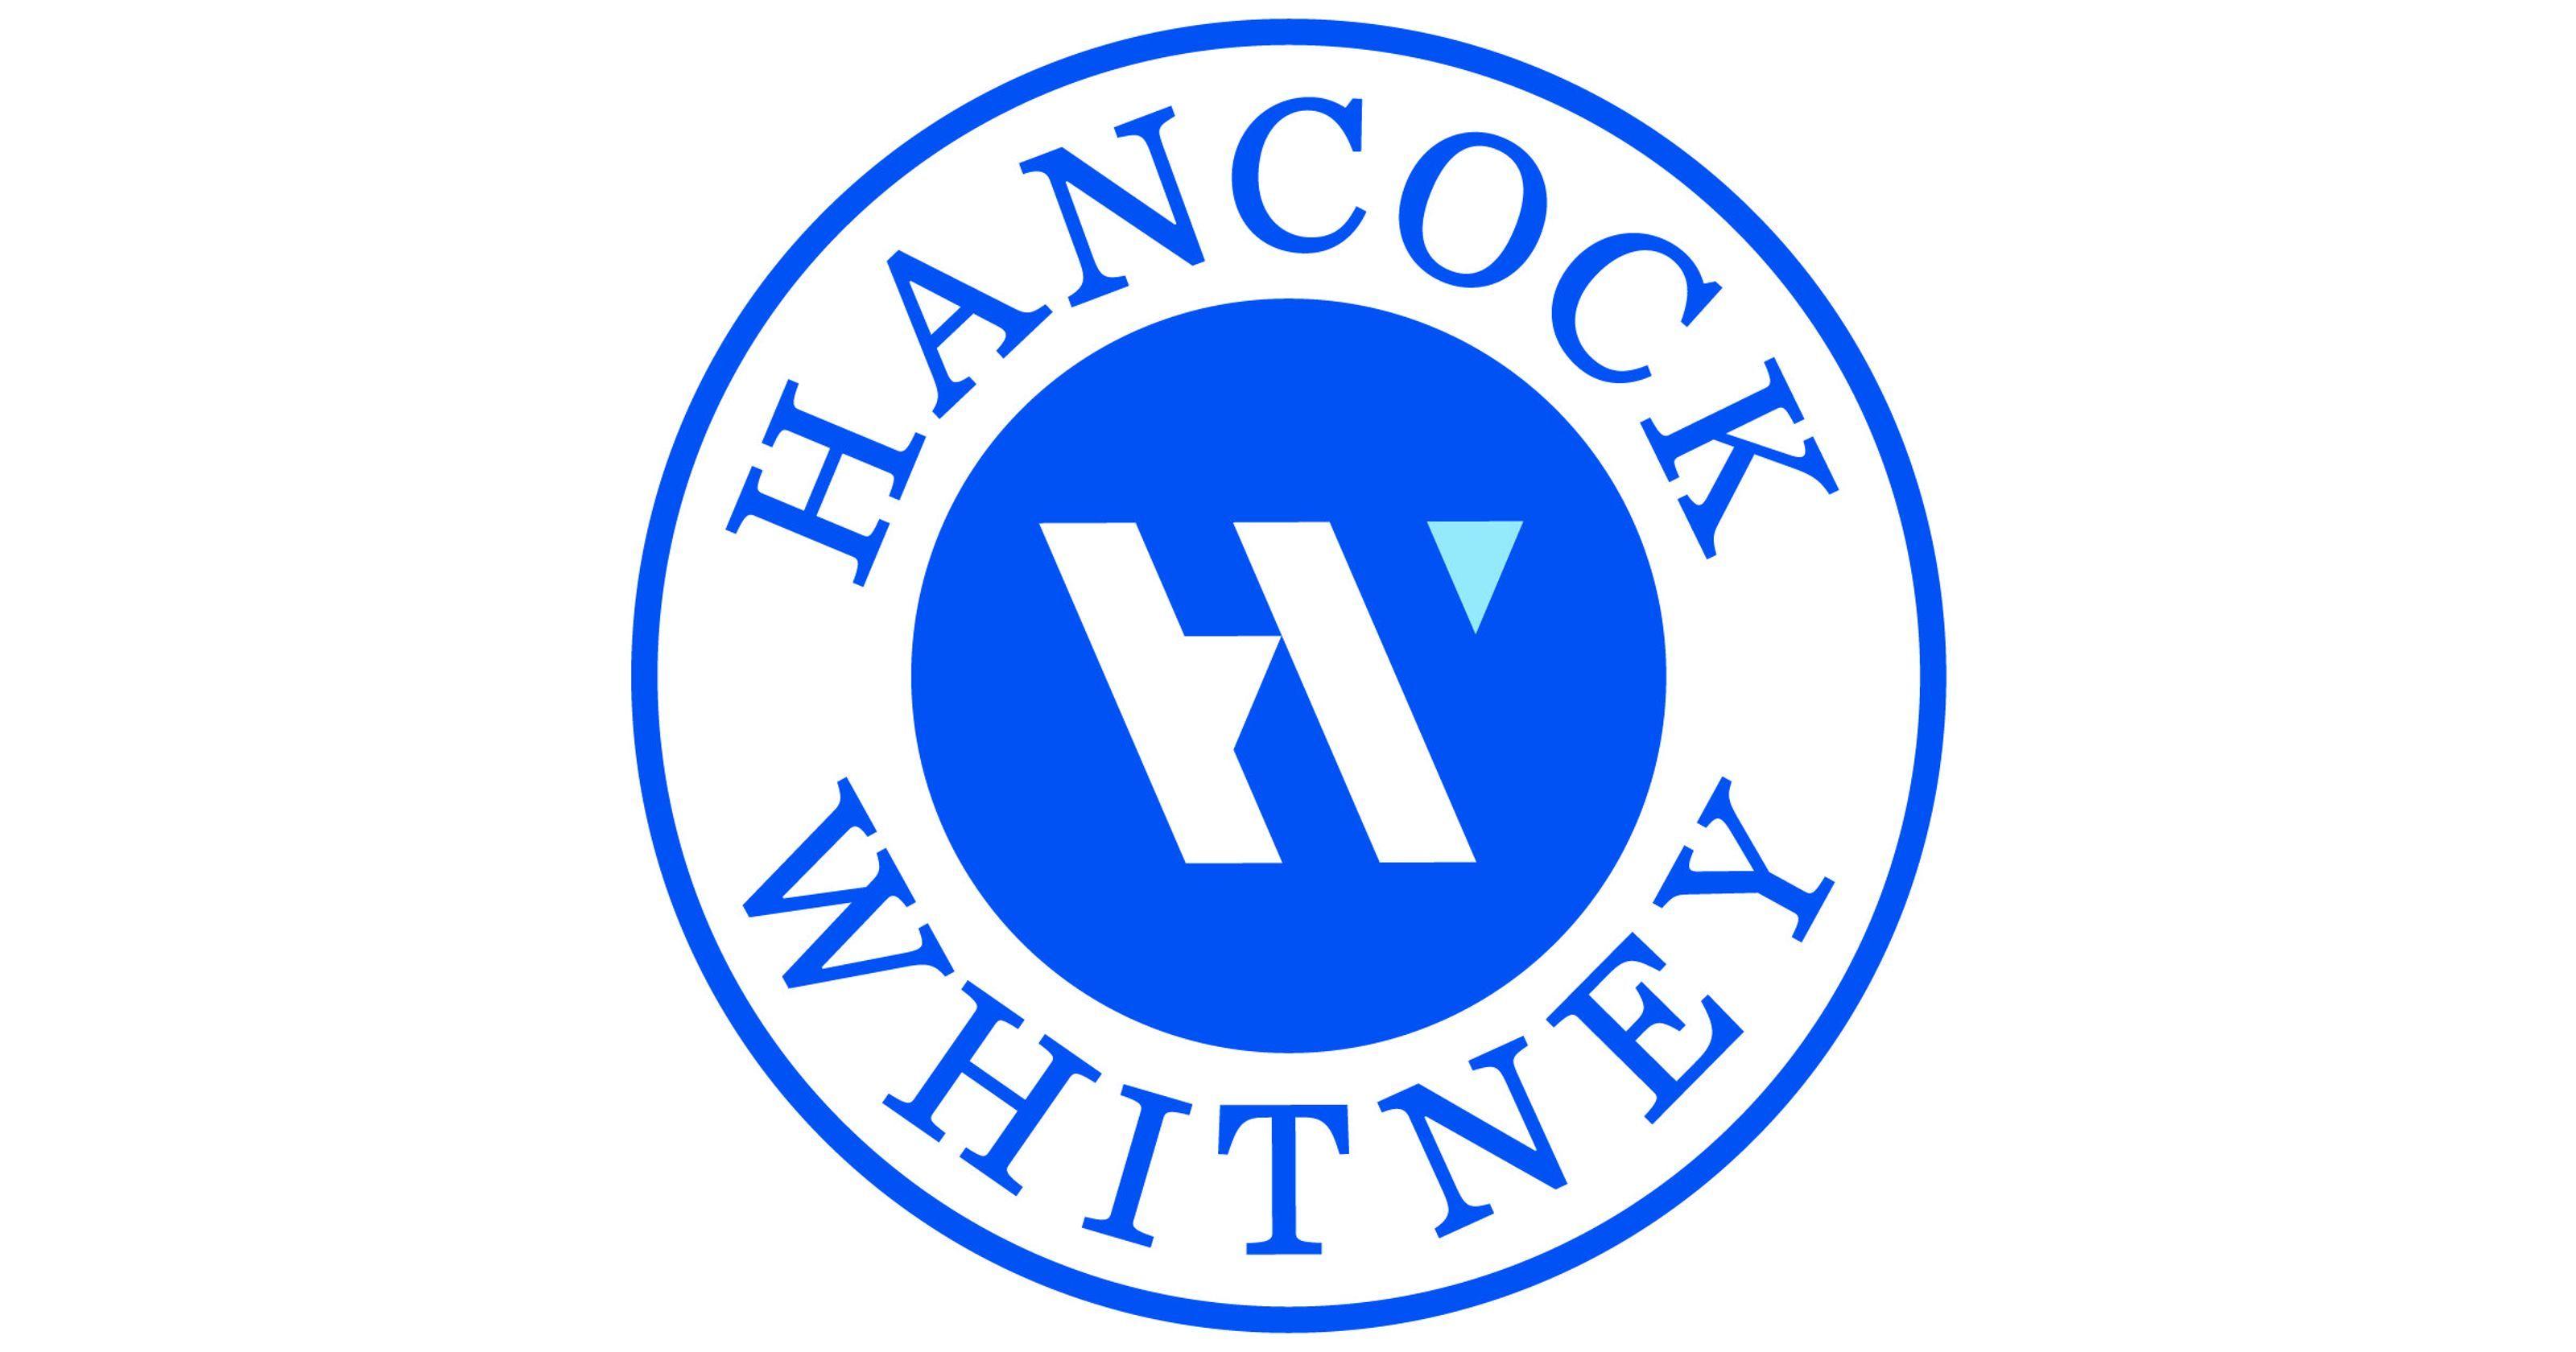 Whitney Logo - New brand name and logo for Hancock Whitney Bank